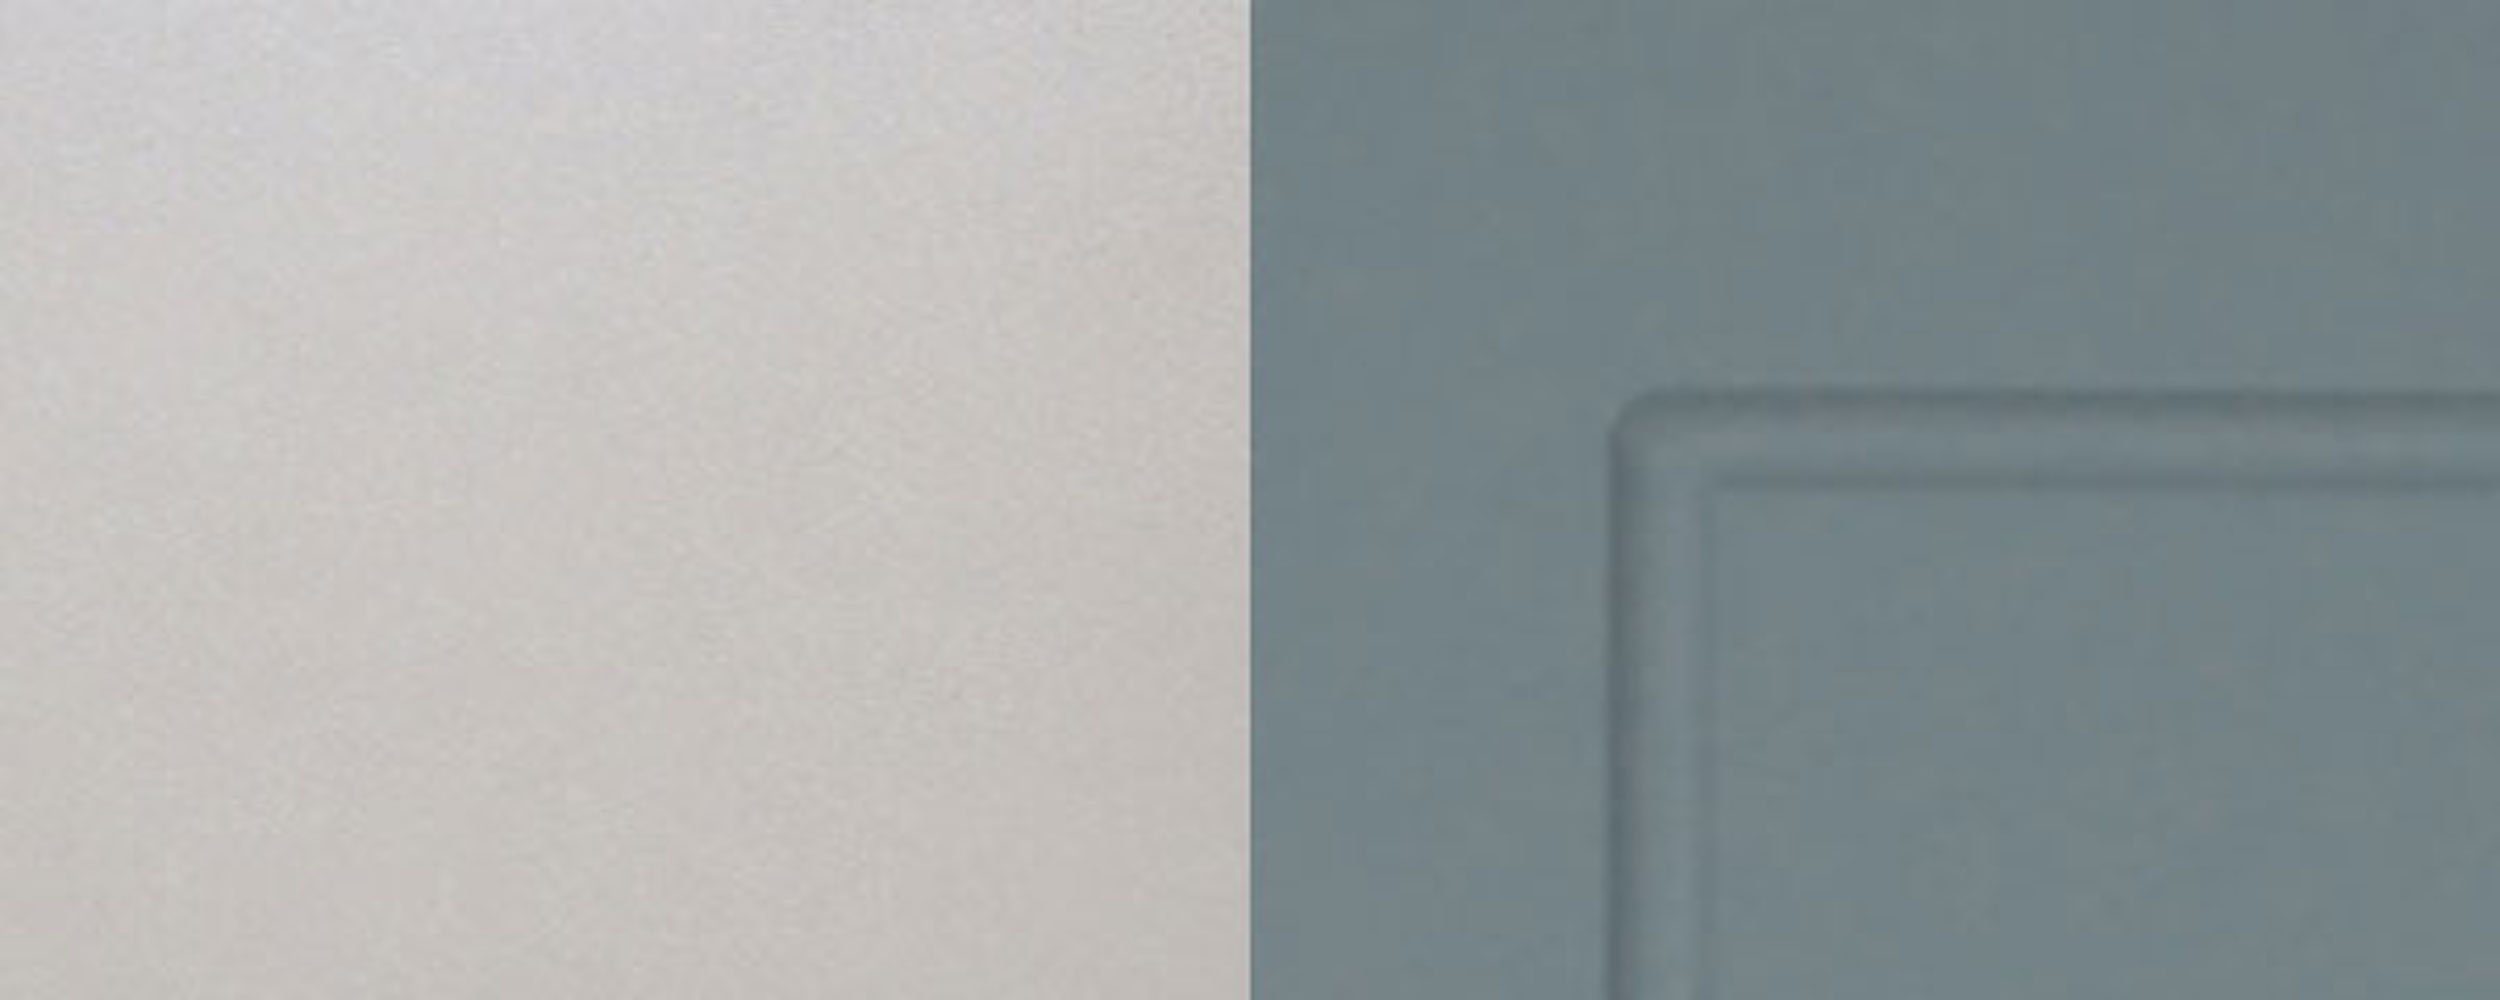 Feldmann-Wohnen Mikrowellenumbauschrank Kvantum (Kvantum) 60cm Front- und mit Klappe Korpusfarbe mint matt wählbar